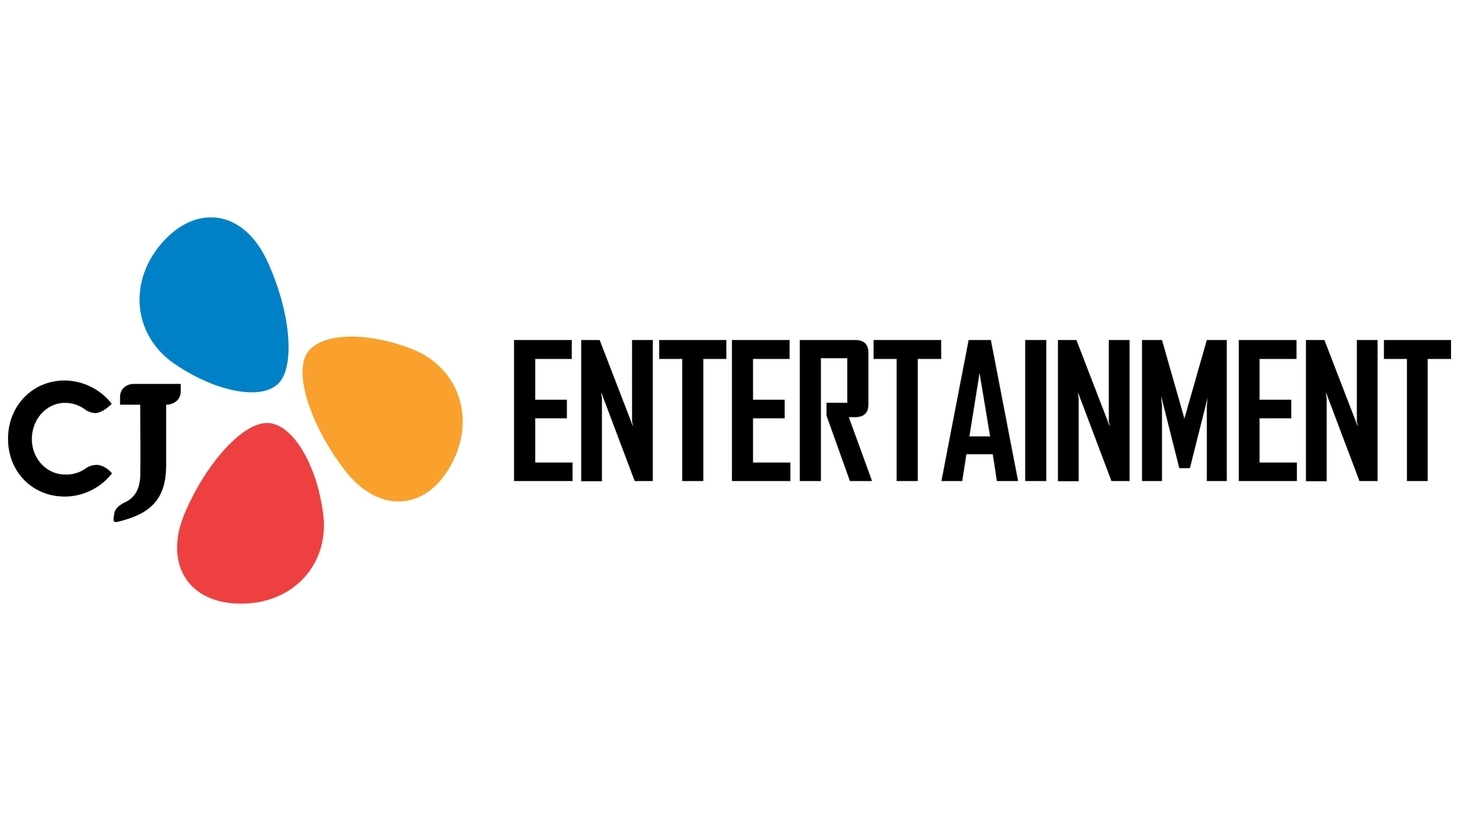 Cj entertainment sign